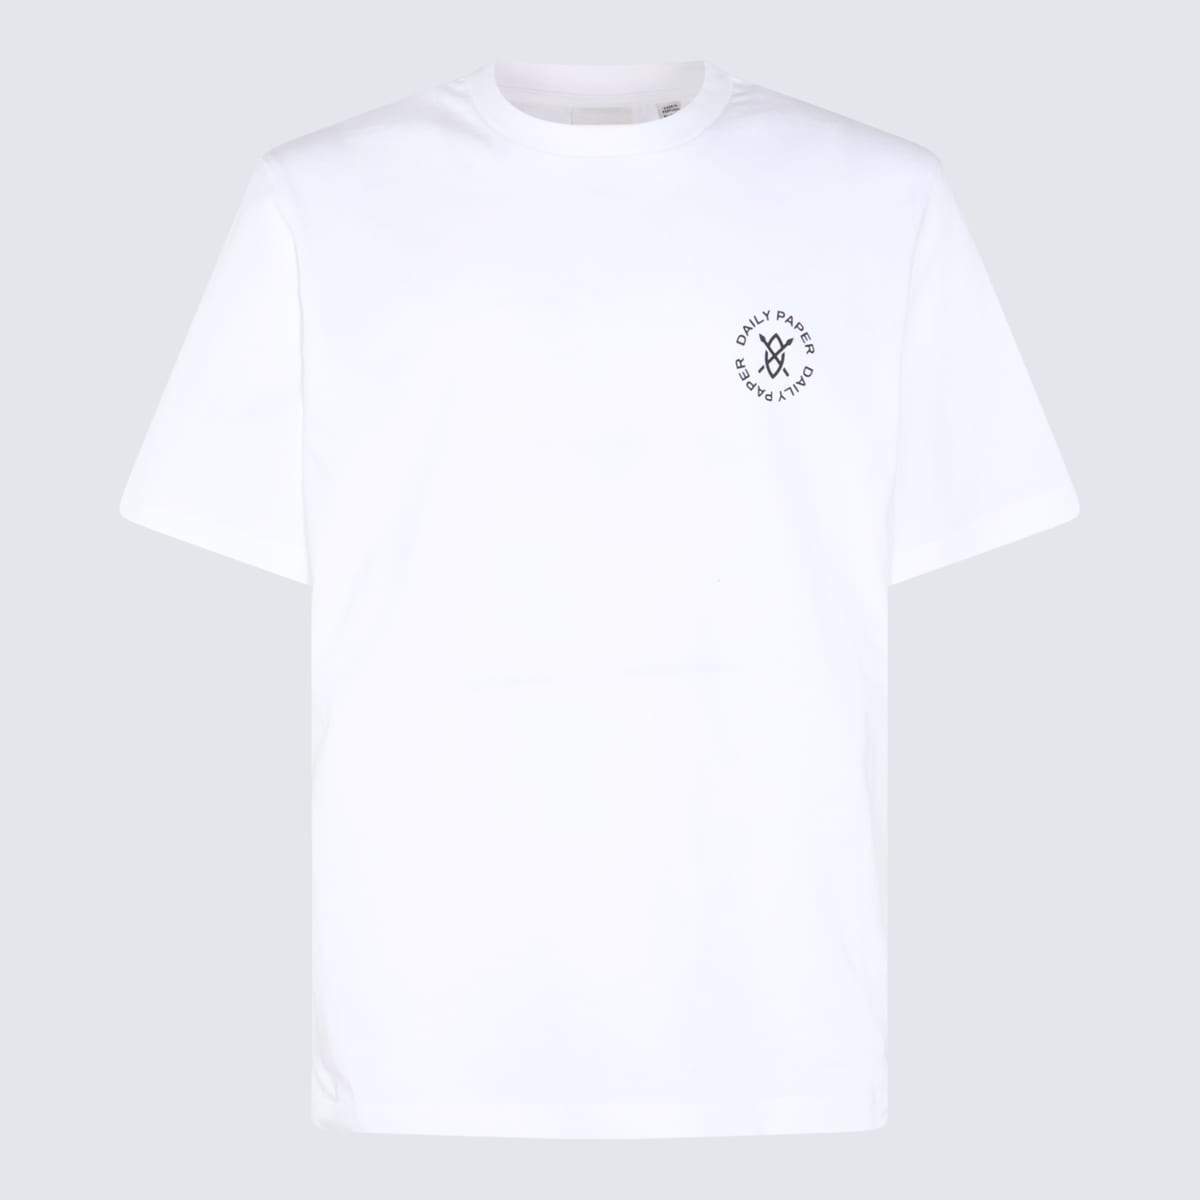 Shop Daily Paper White Cotton T-shirt